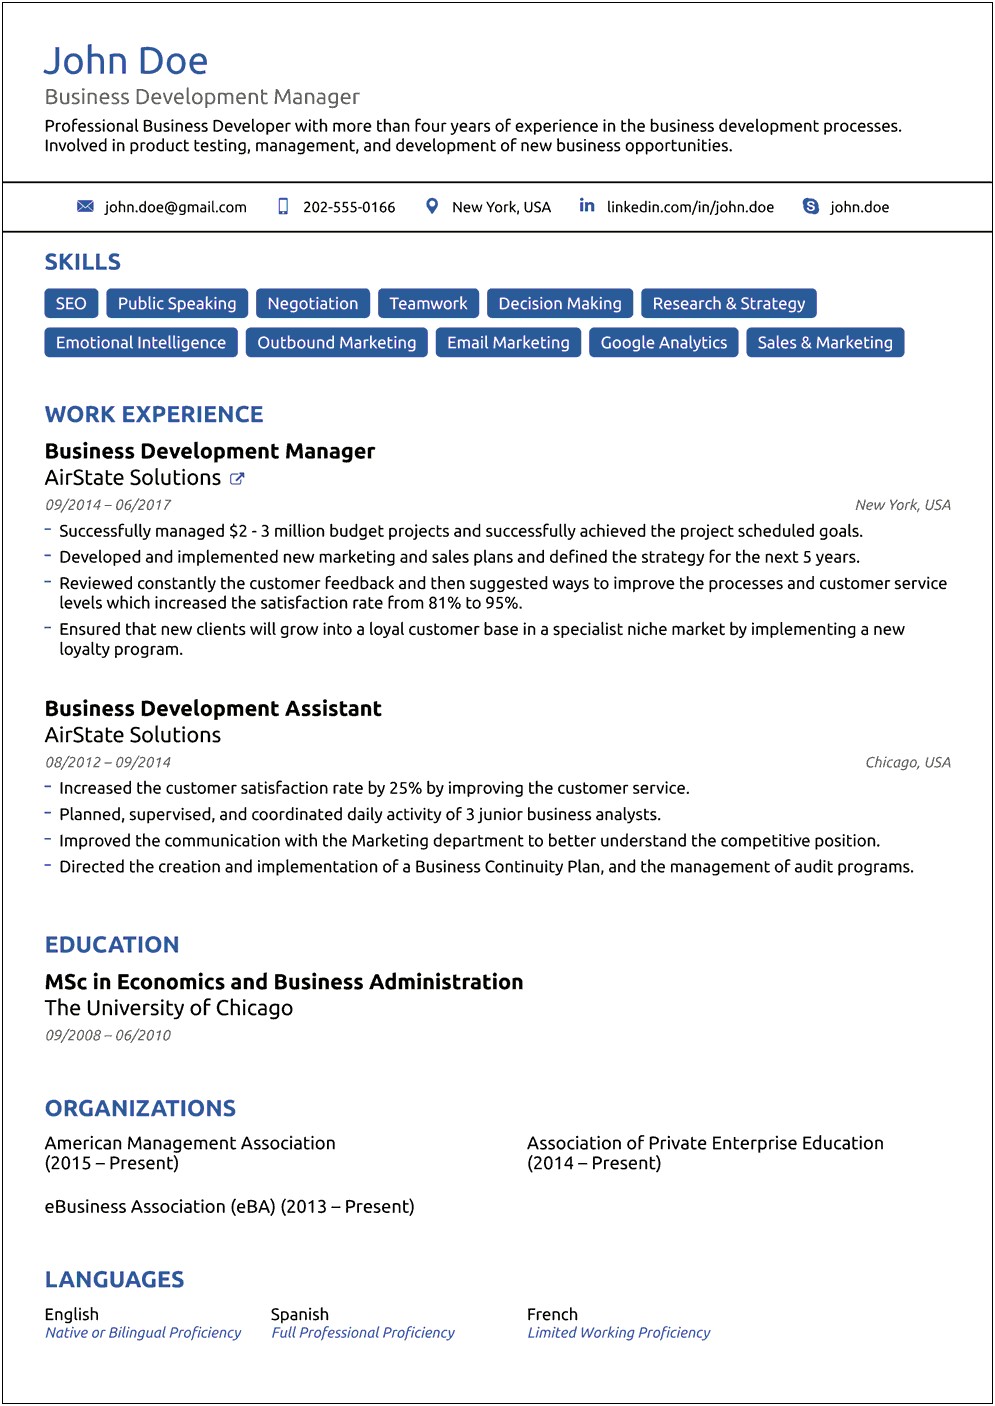 Resume Format Job Application Free Download